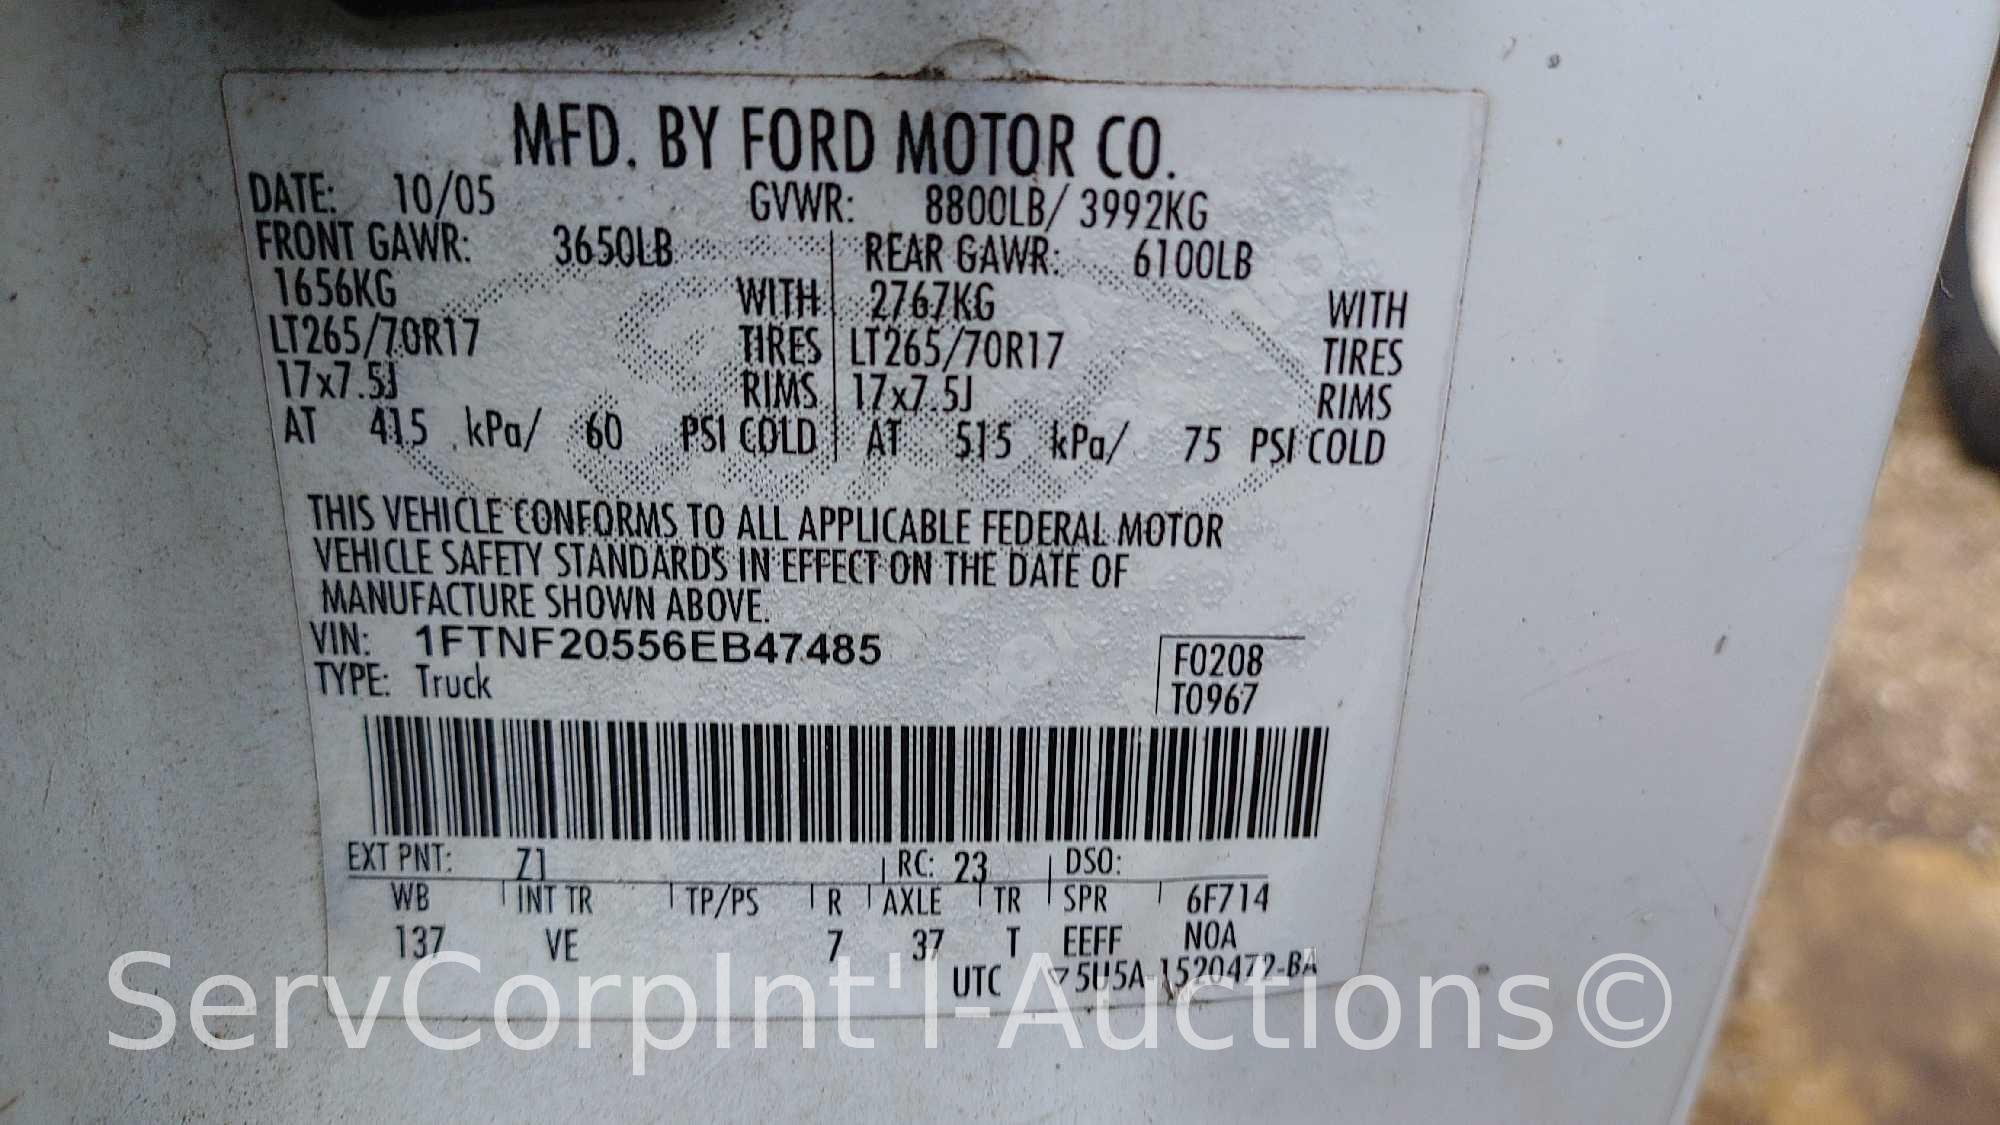 2006 Ford F-250 Toolbody Truck, VIN # 1FTNF20556EB47485